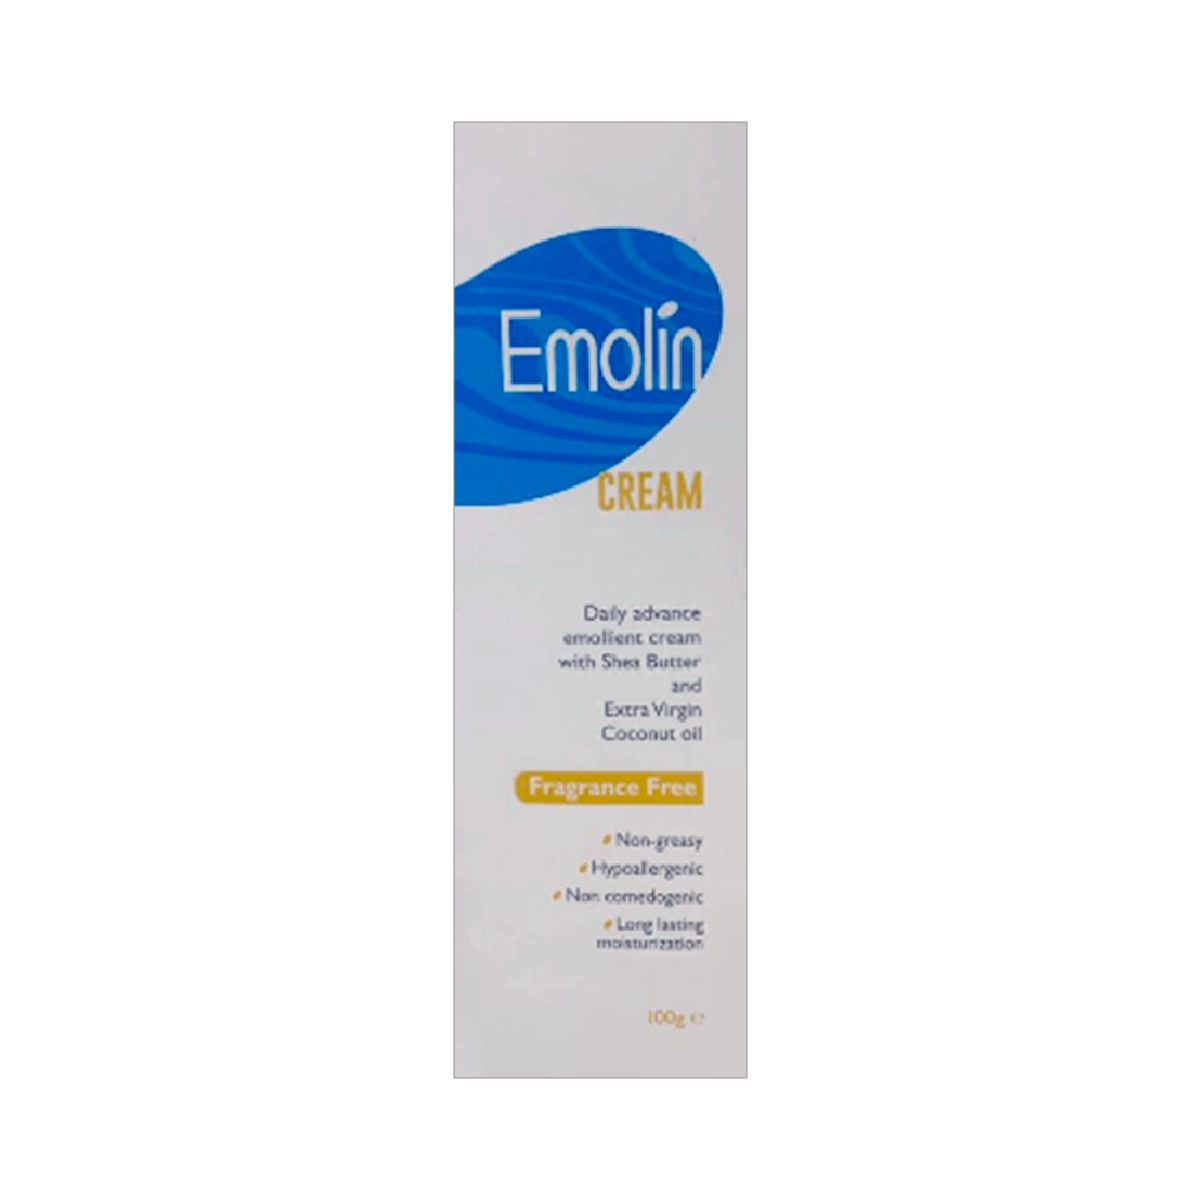 Emolin Daily Advance Emollient Cream 100g